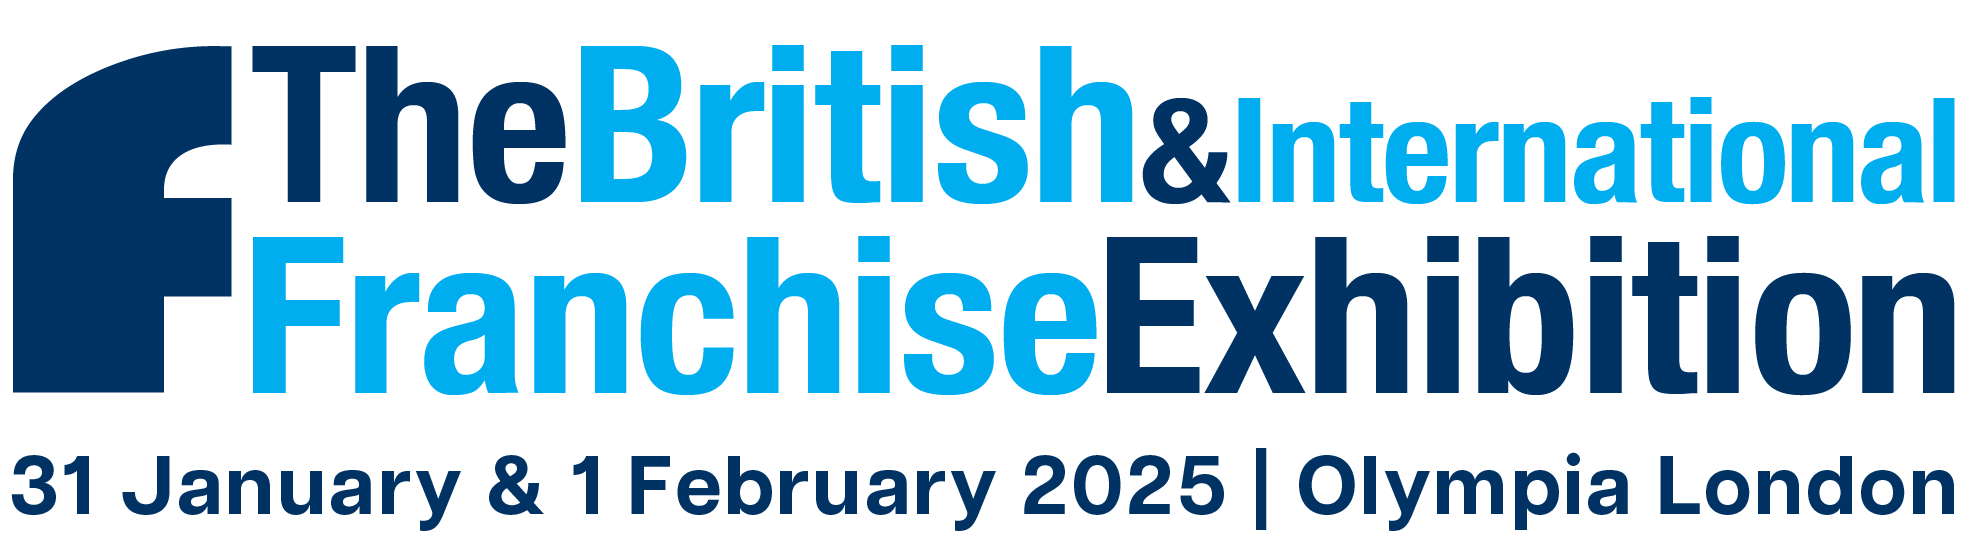 The British & International Franchise Exhibition 2025